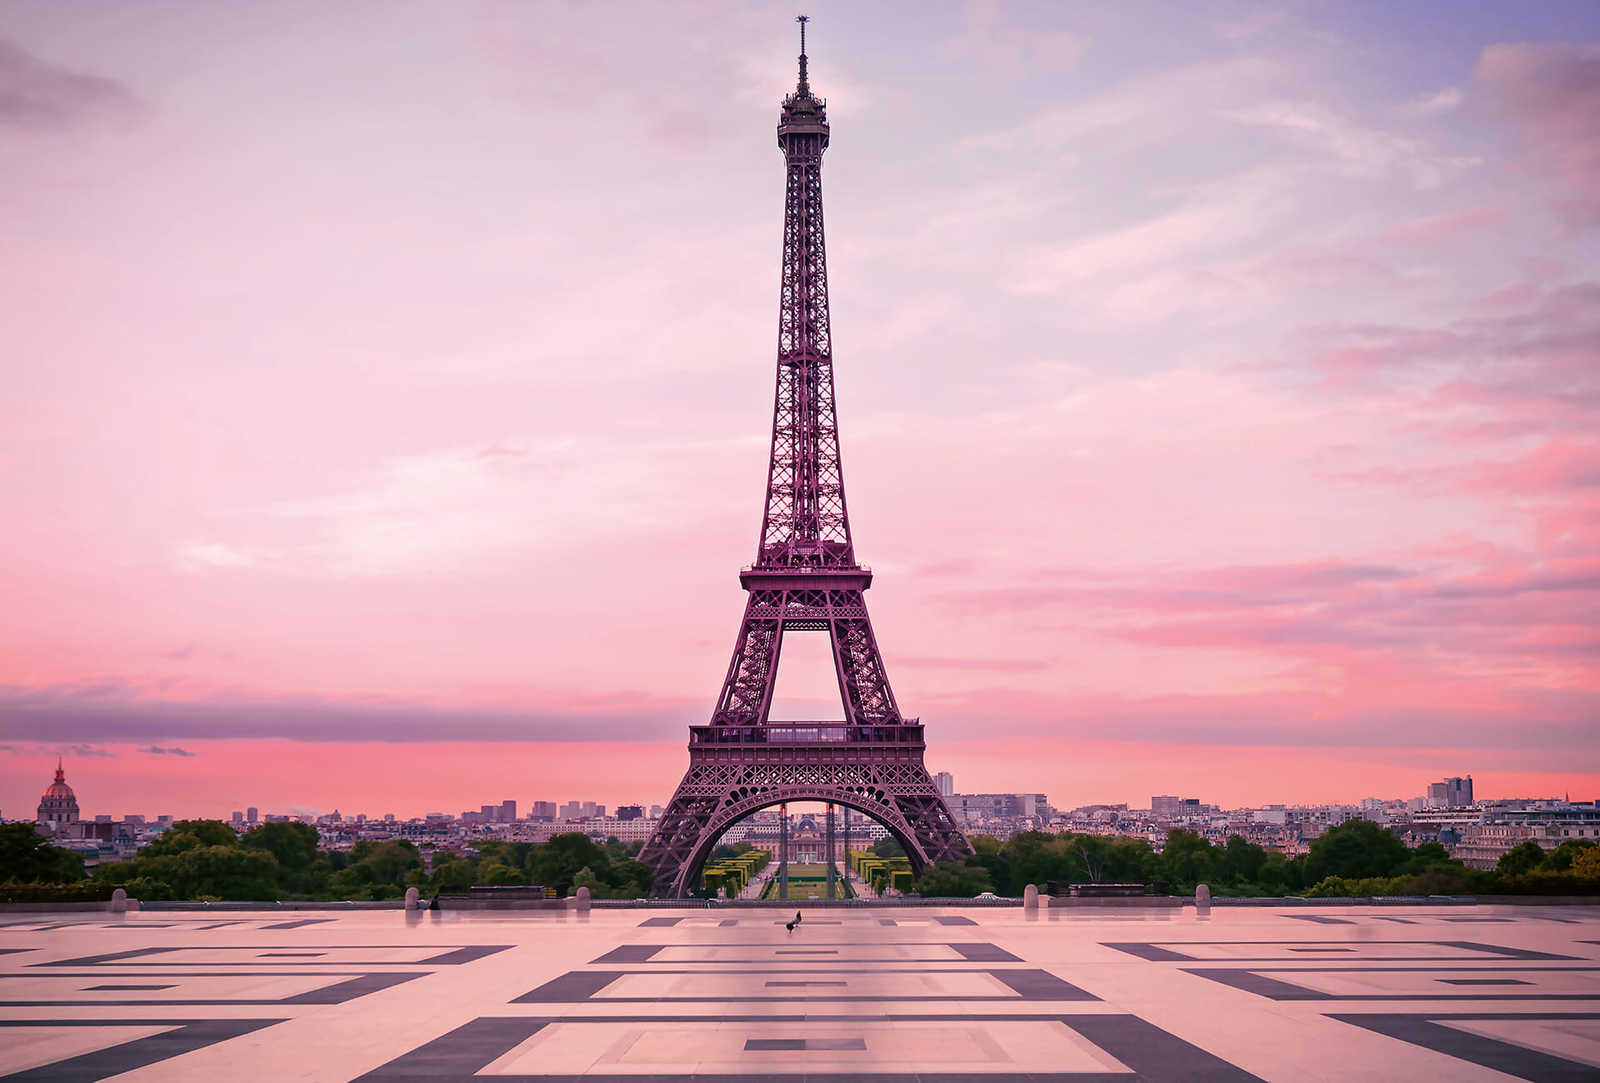         Photo wallpaper Eiffel Tower Paris at sunset
    